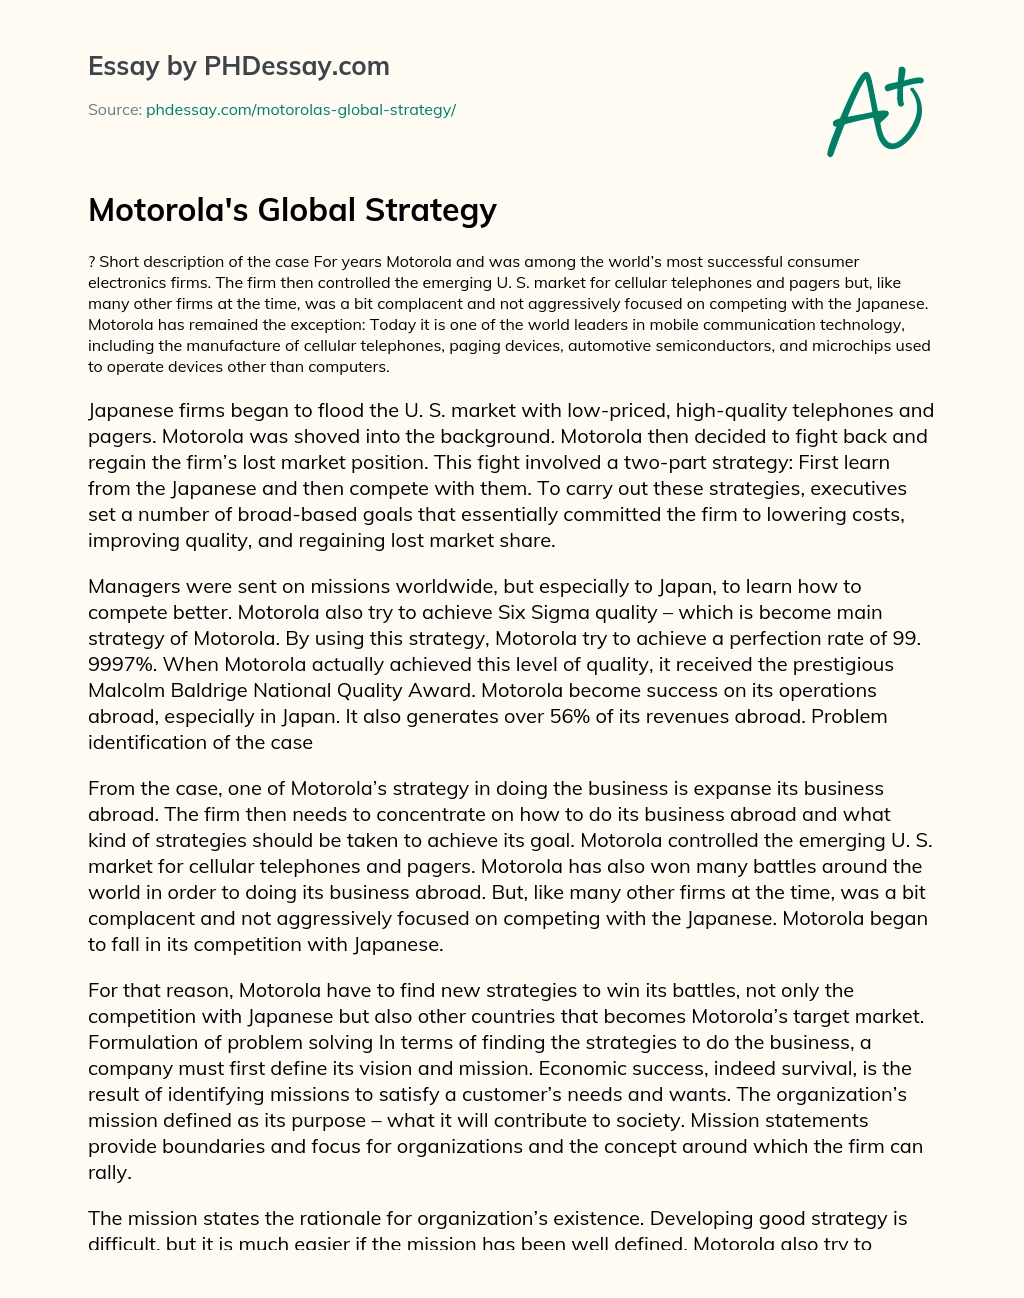 Motorola’s Global Strategy essay